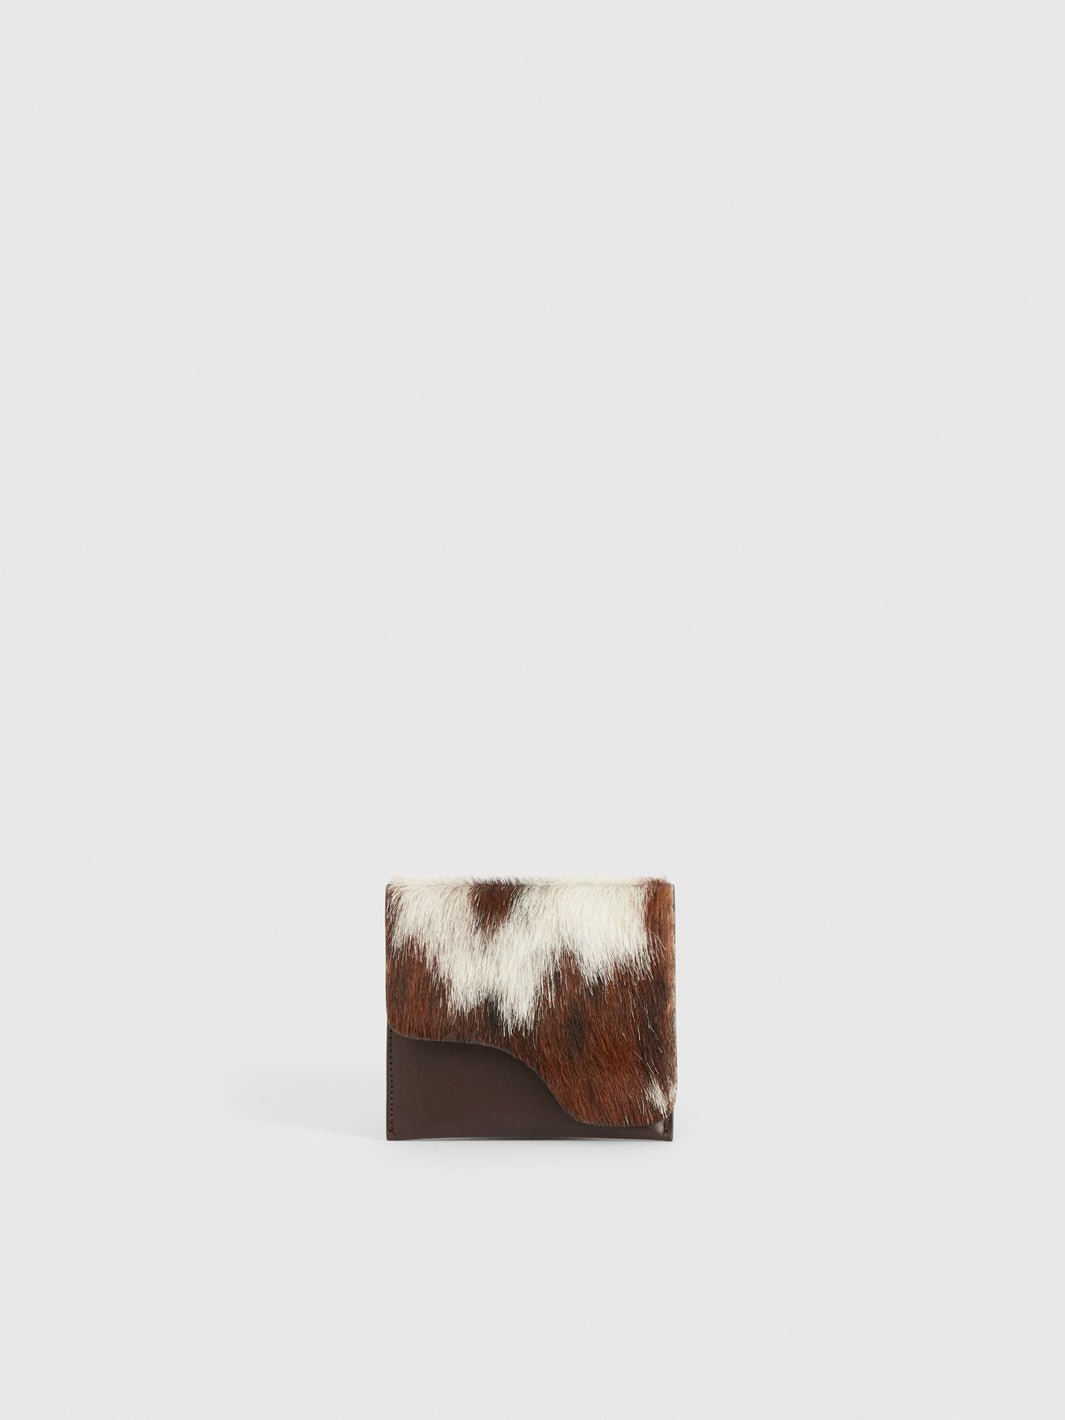 Olba Unique/Walnut Cow Print/Leather Wallet